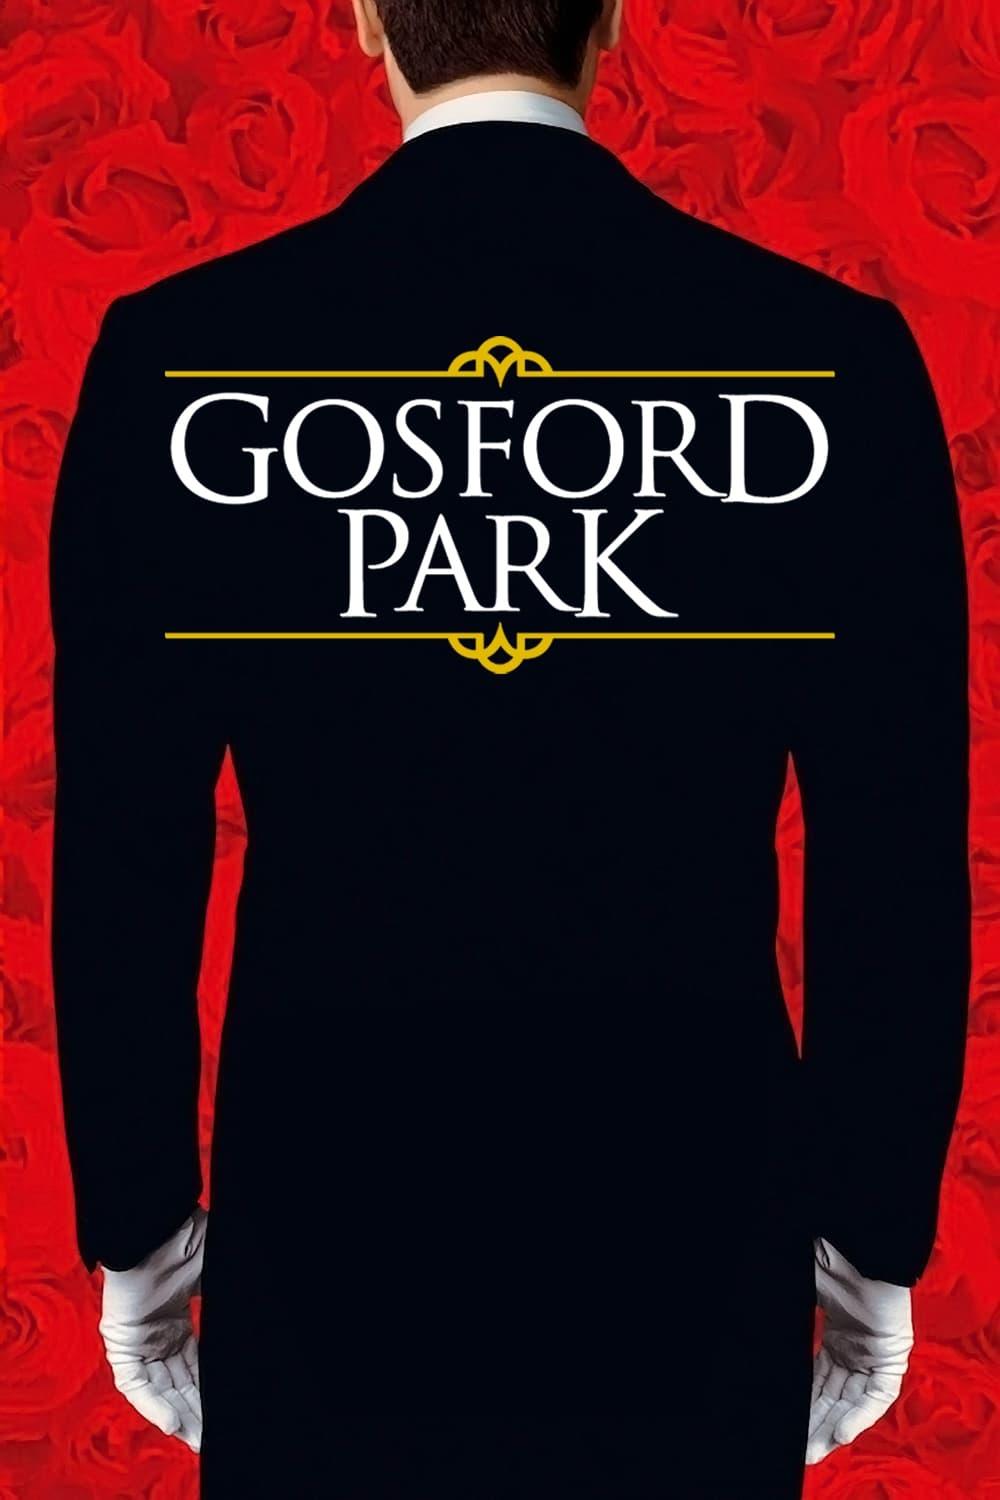 Gosford Park poster